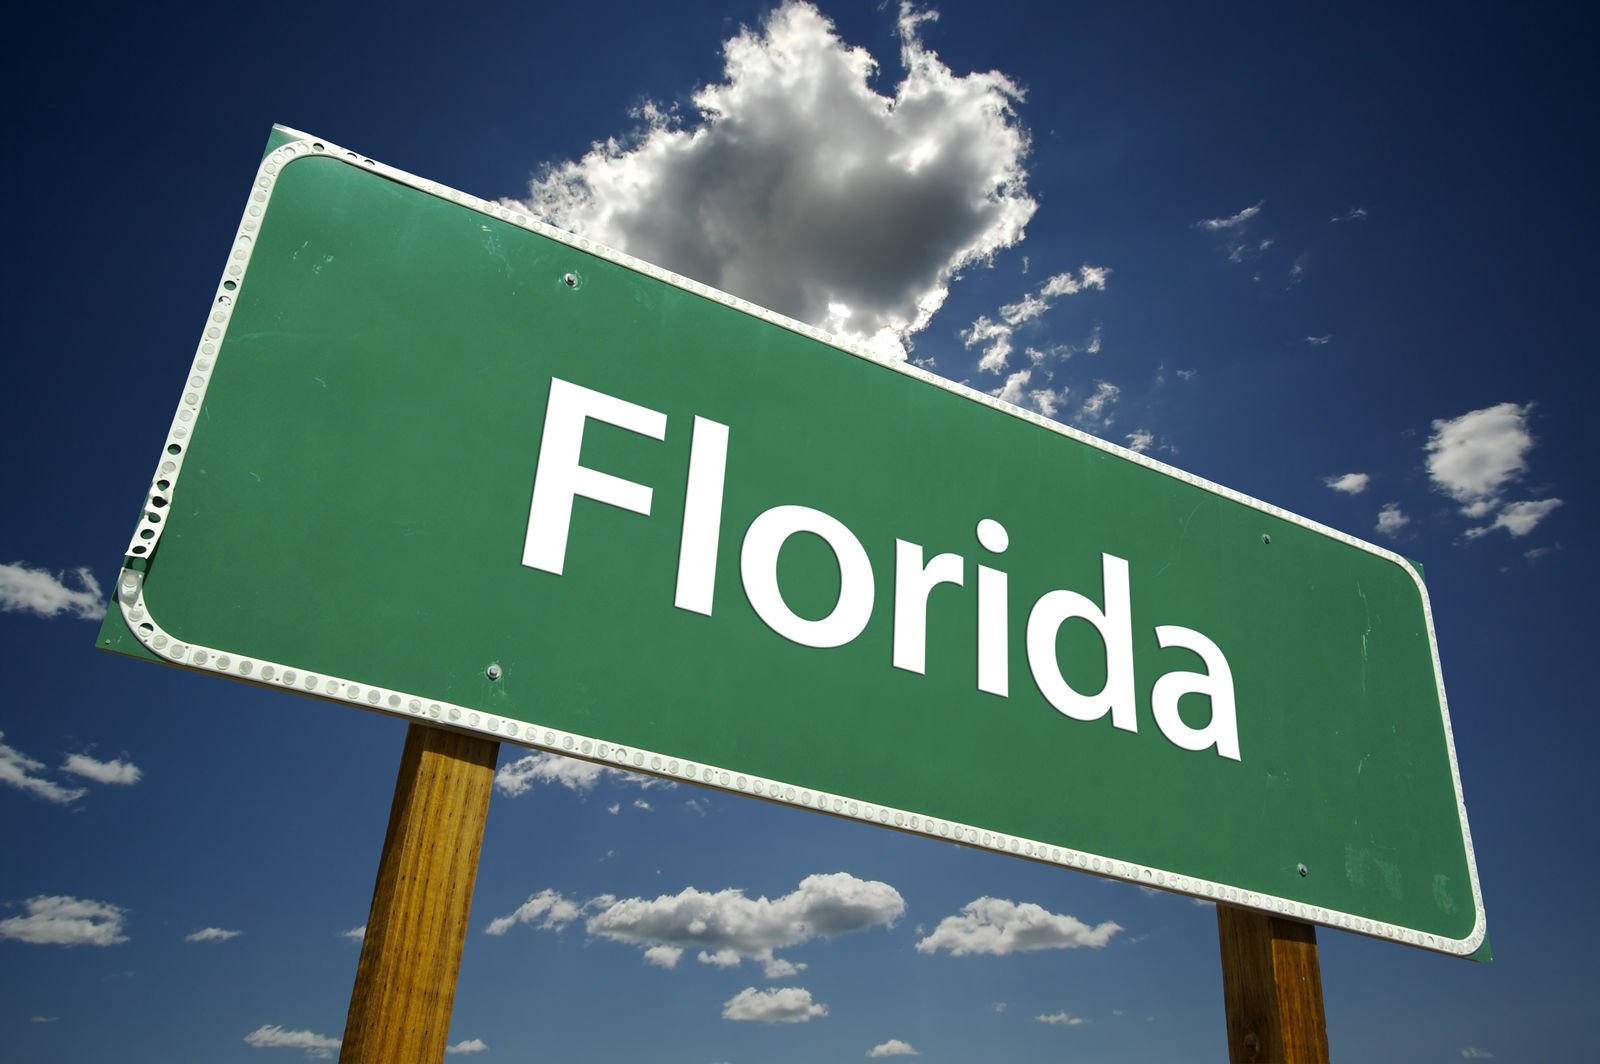 Who governs Florida auto insurance companies?